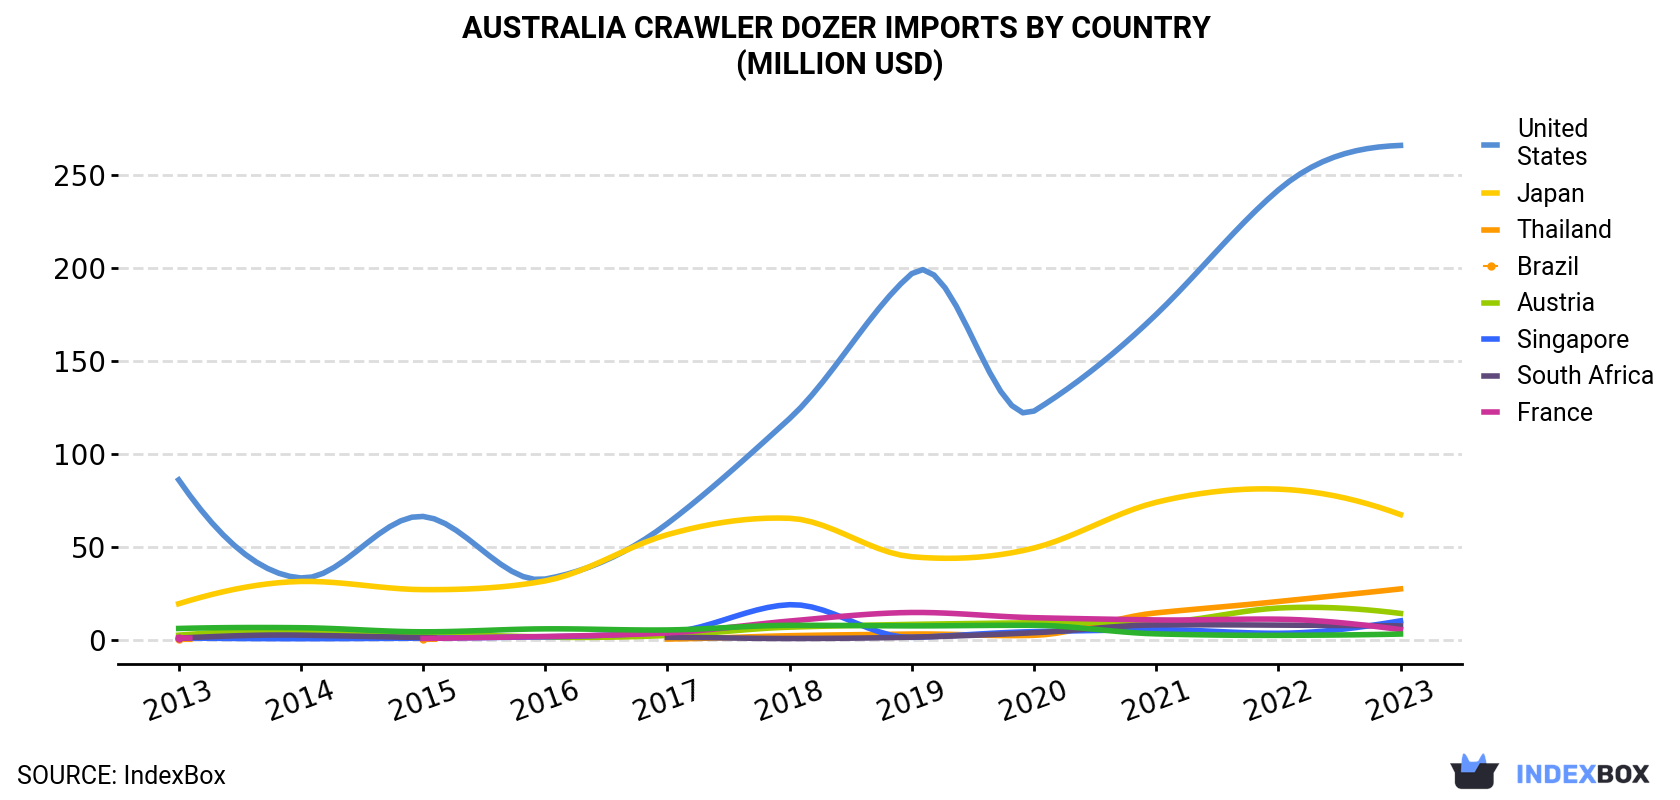 Australia Crawler Dozer Imports By Country (Million USD)